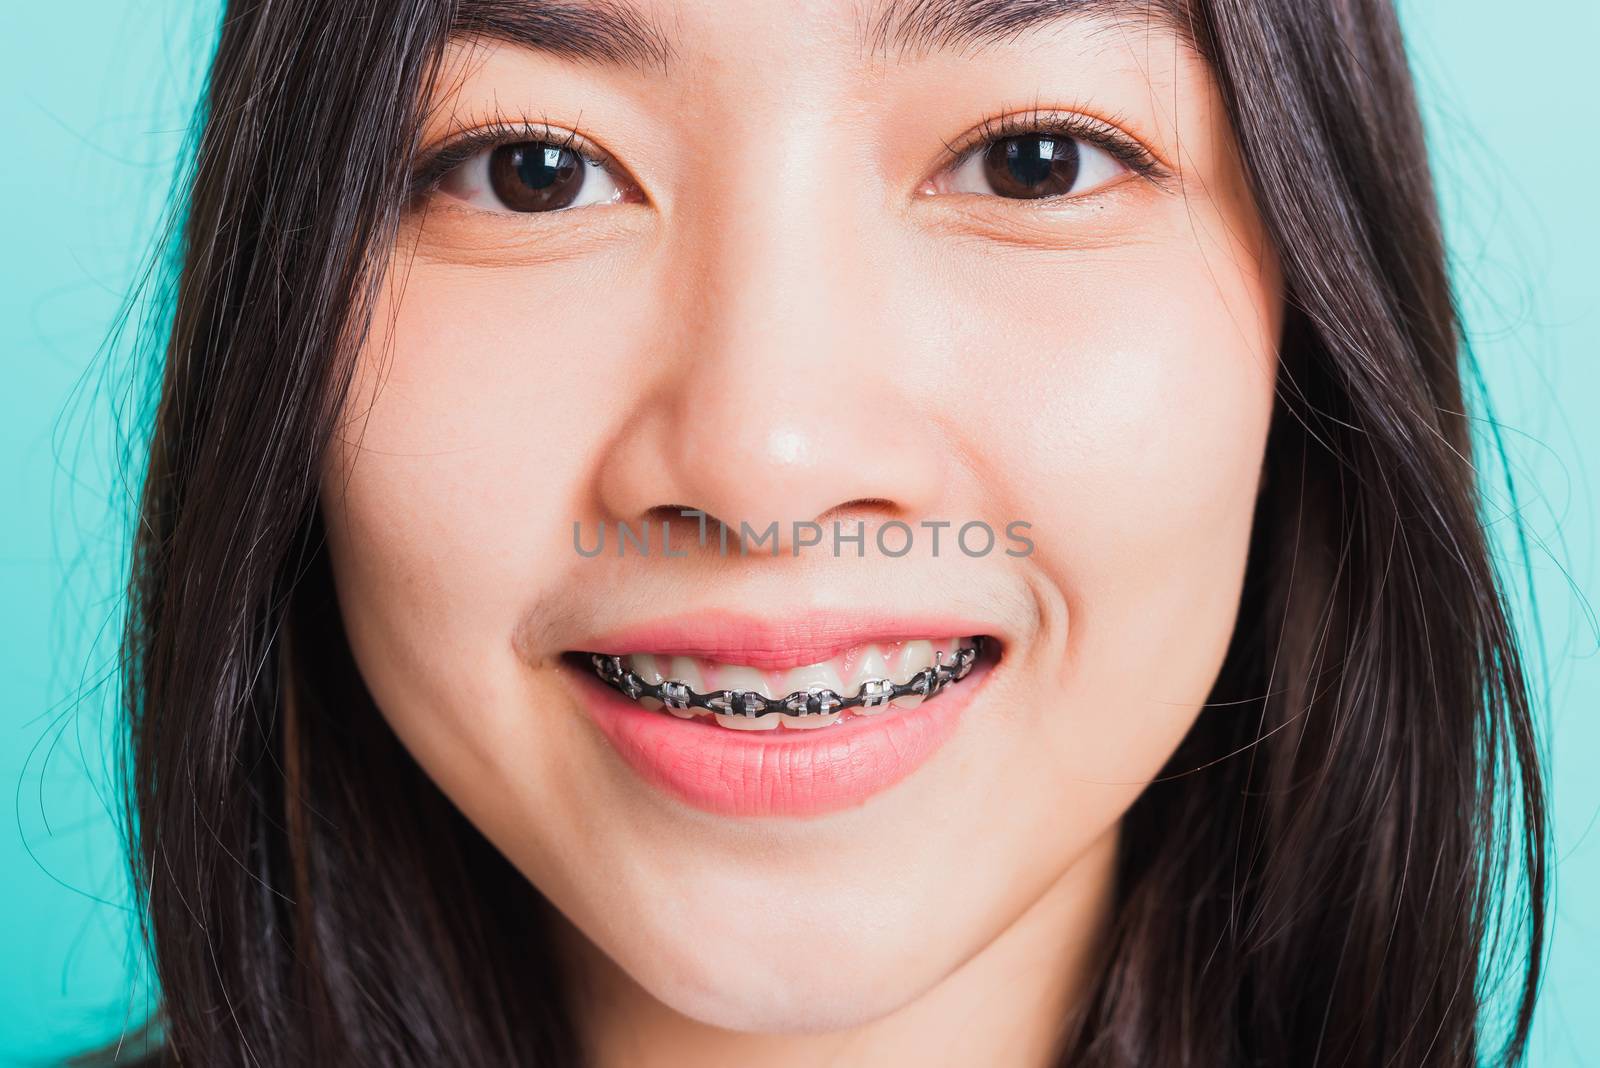 Wman smile have dental braces on teeth laughing by Sorapop